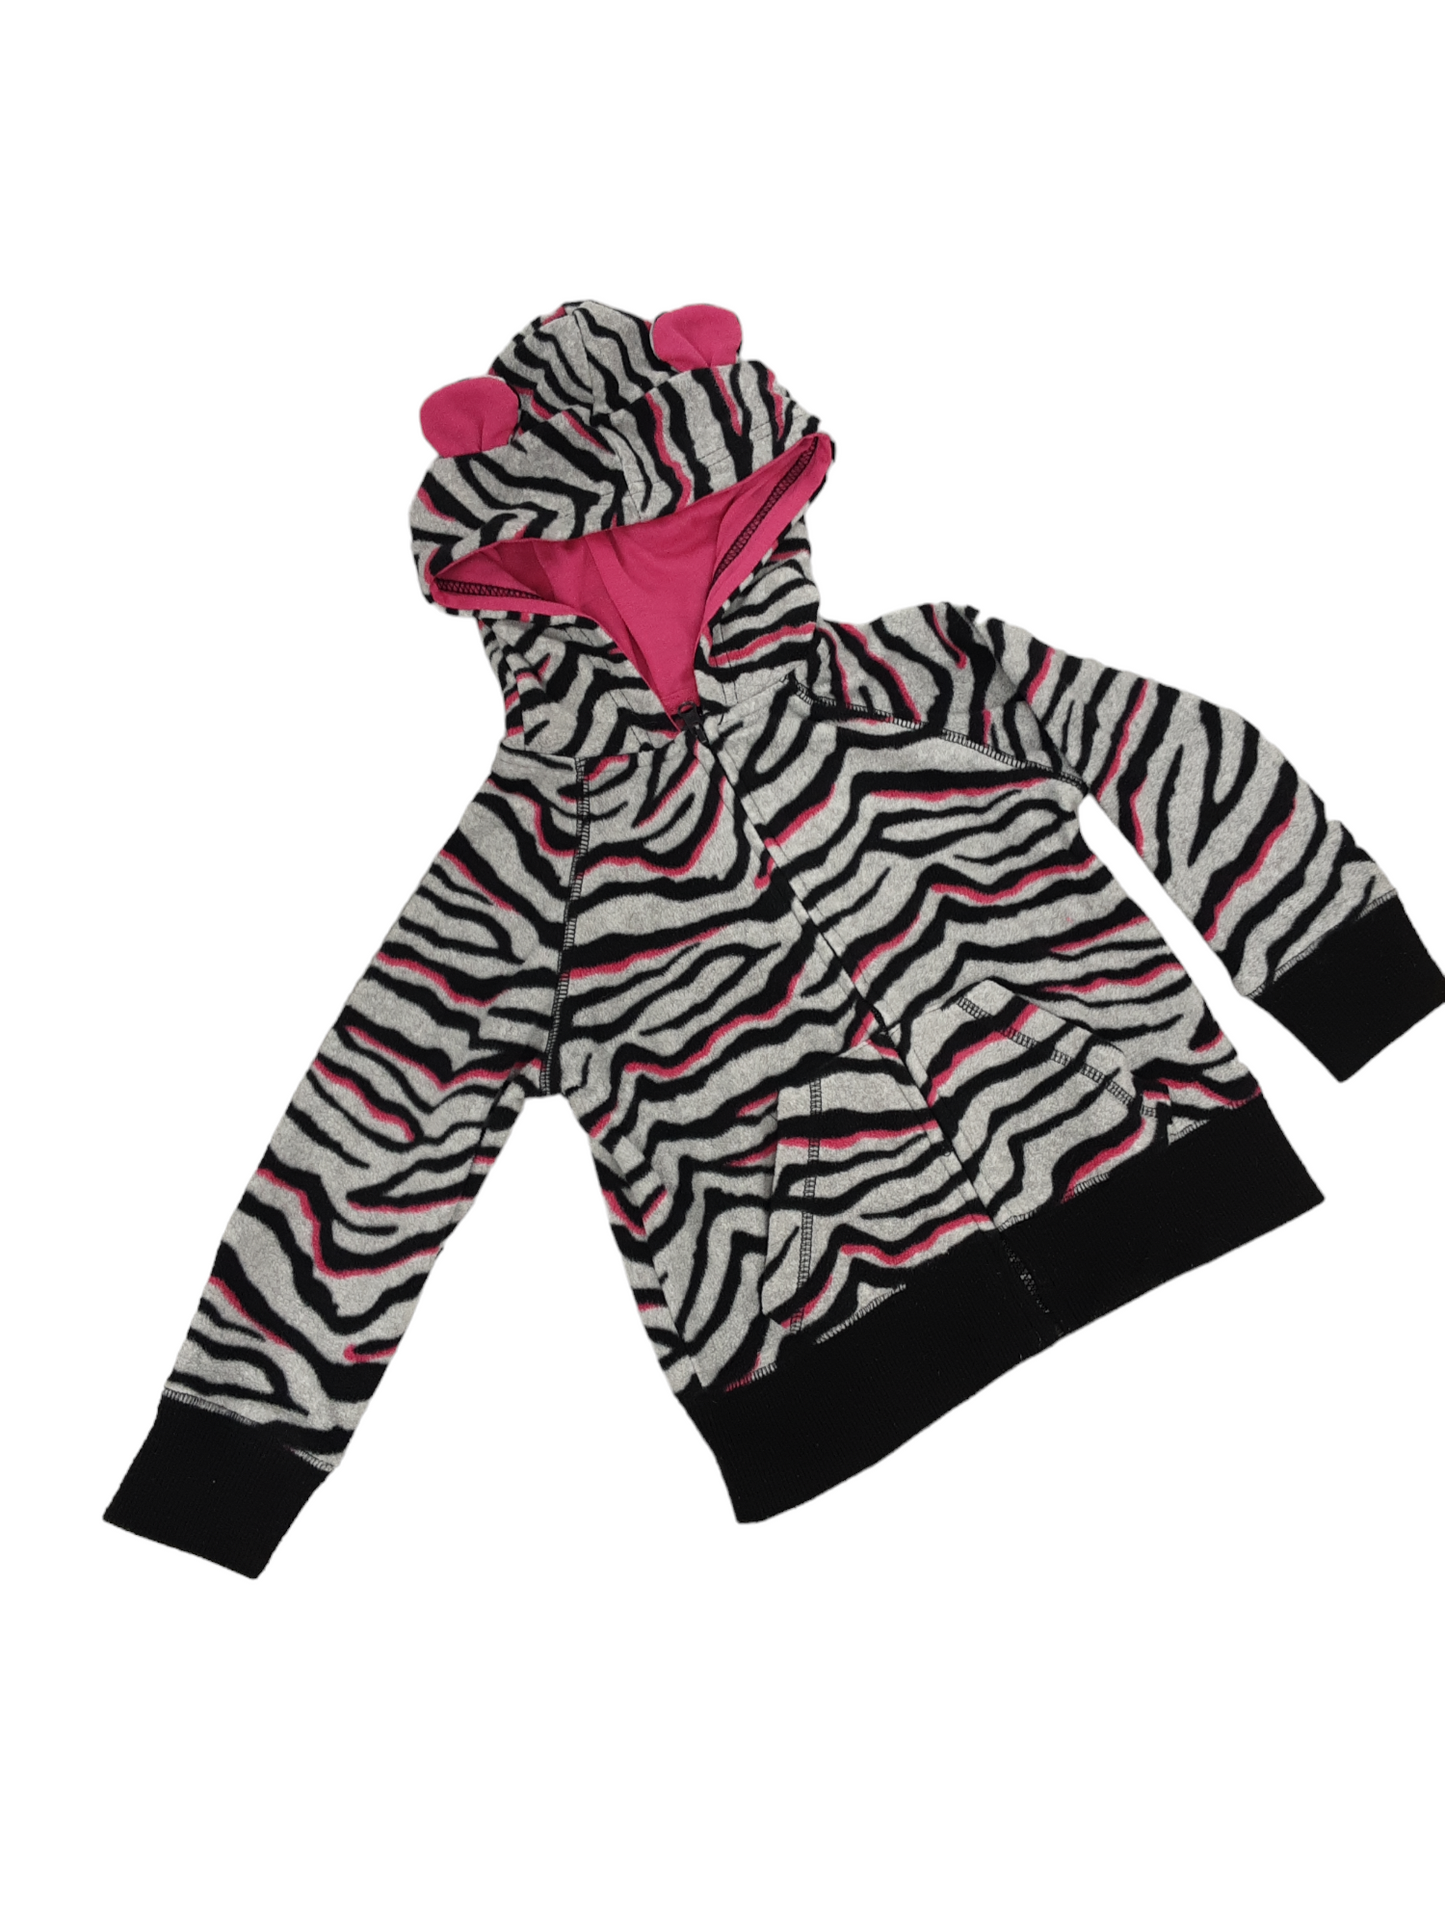 Hooded zebra zip up size 3t